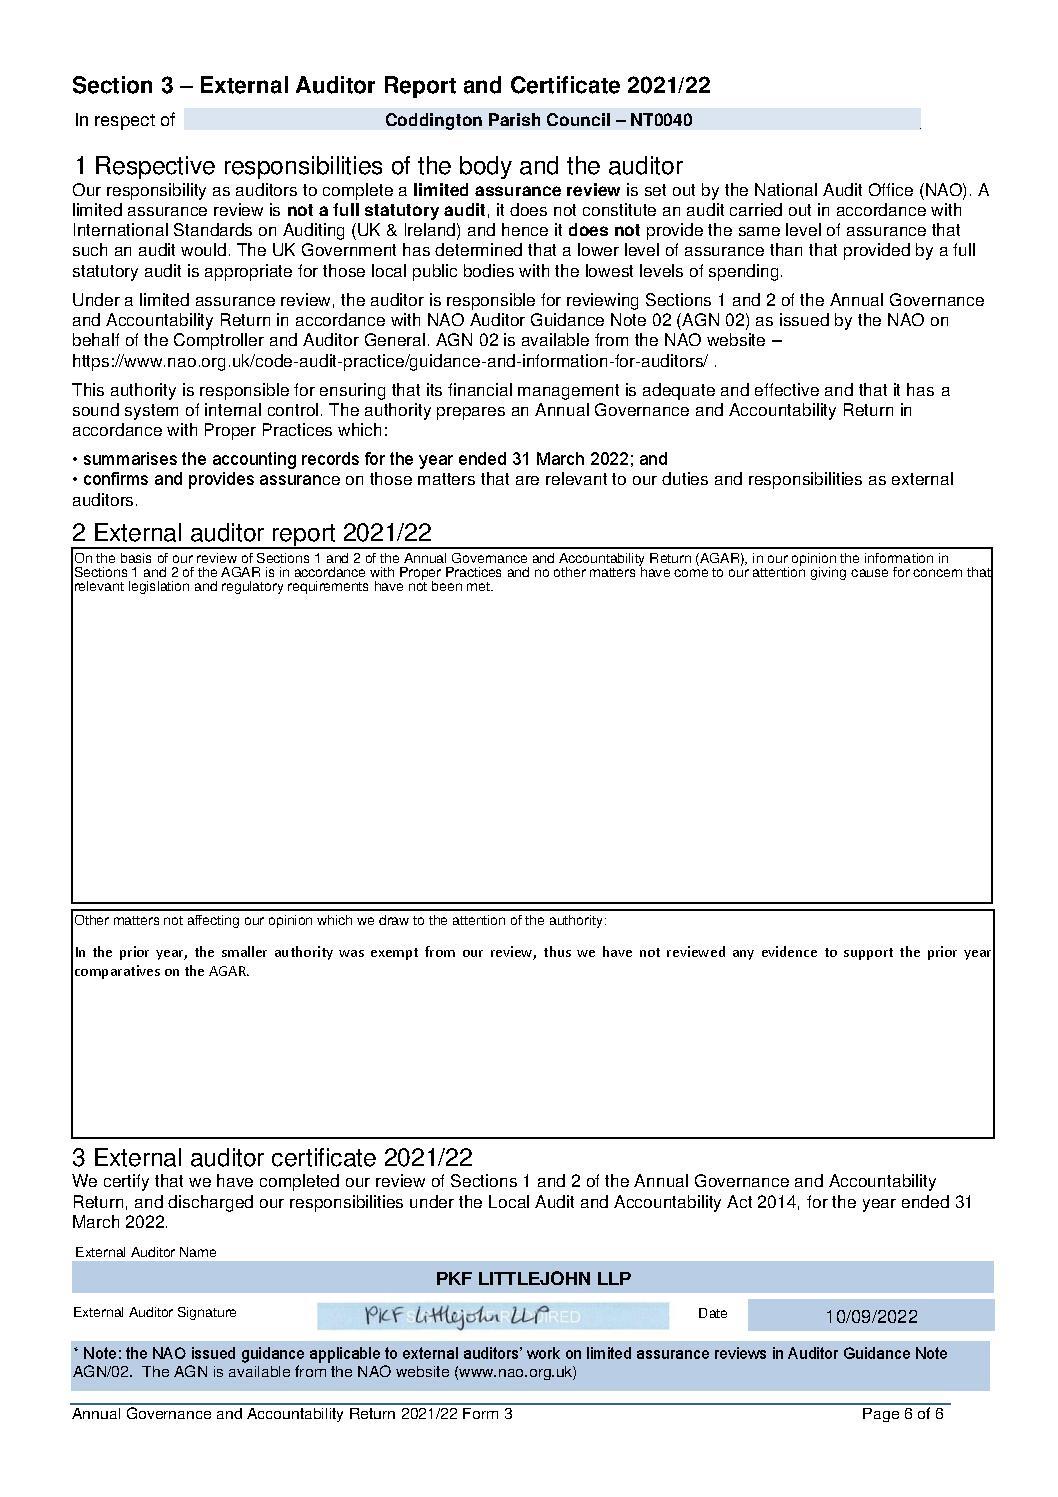 External Auditor Report & Certificate 2021/22